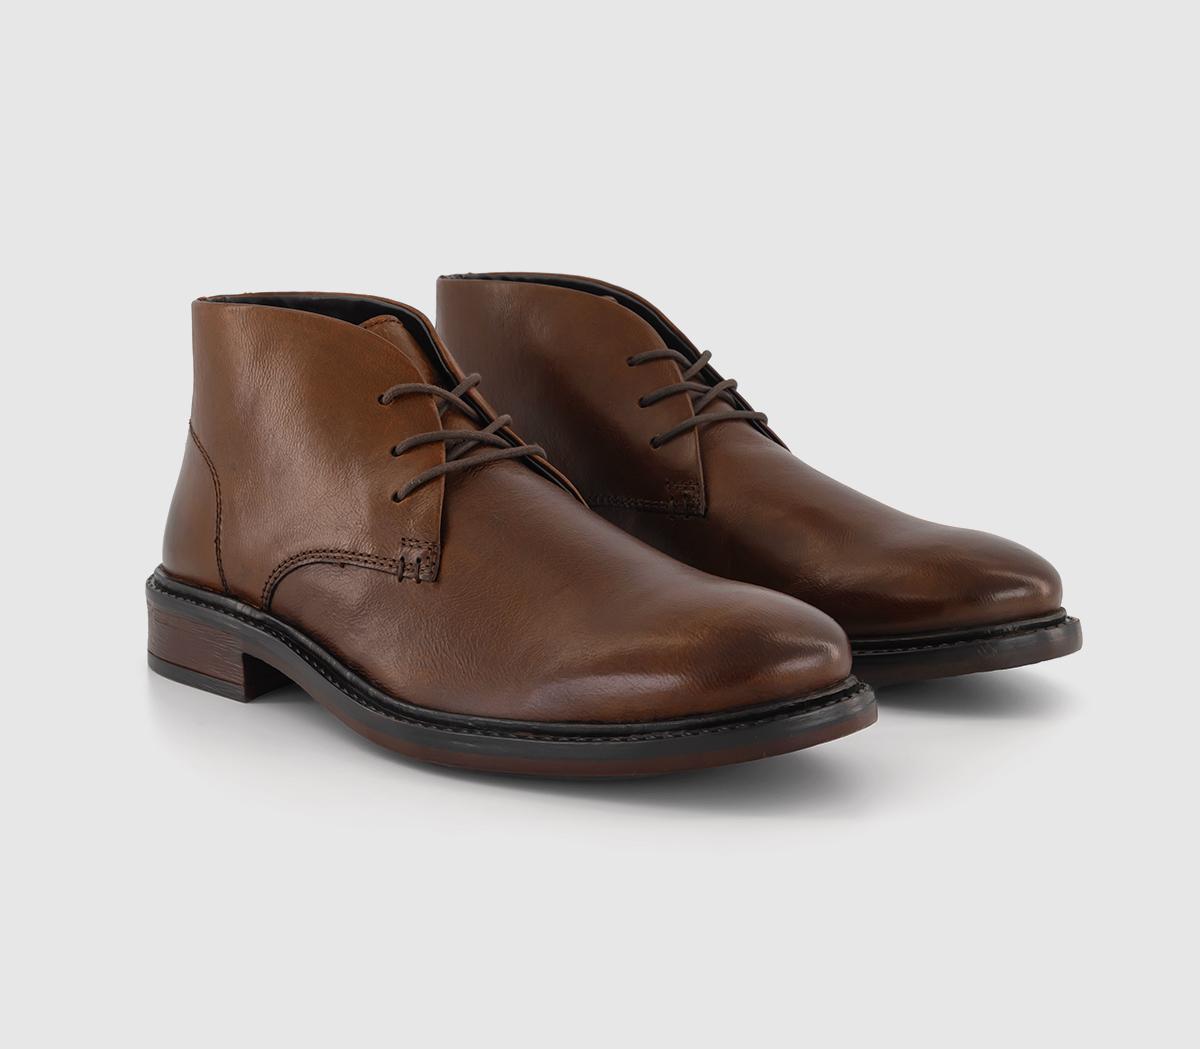 OFFICE Mens Burlington Chukka Boots Brown Leather, 8